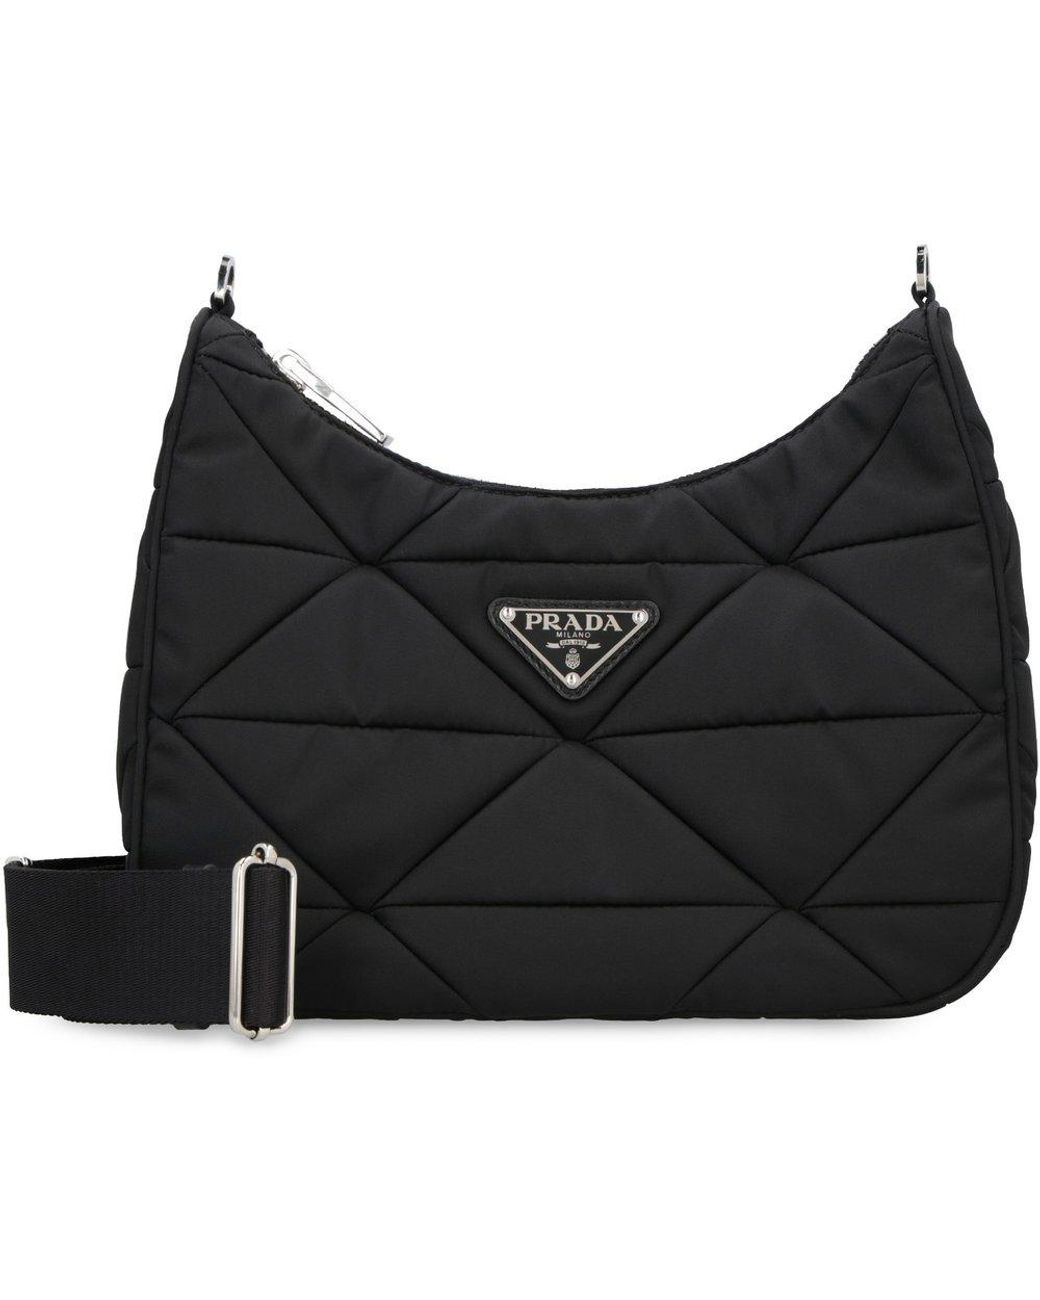 Prada Re-nylon Padded Shoulder Bag in Black | Lyst